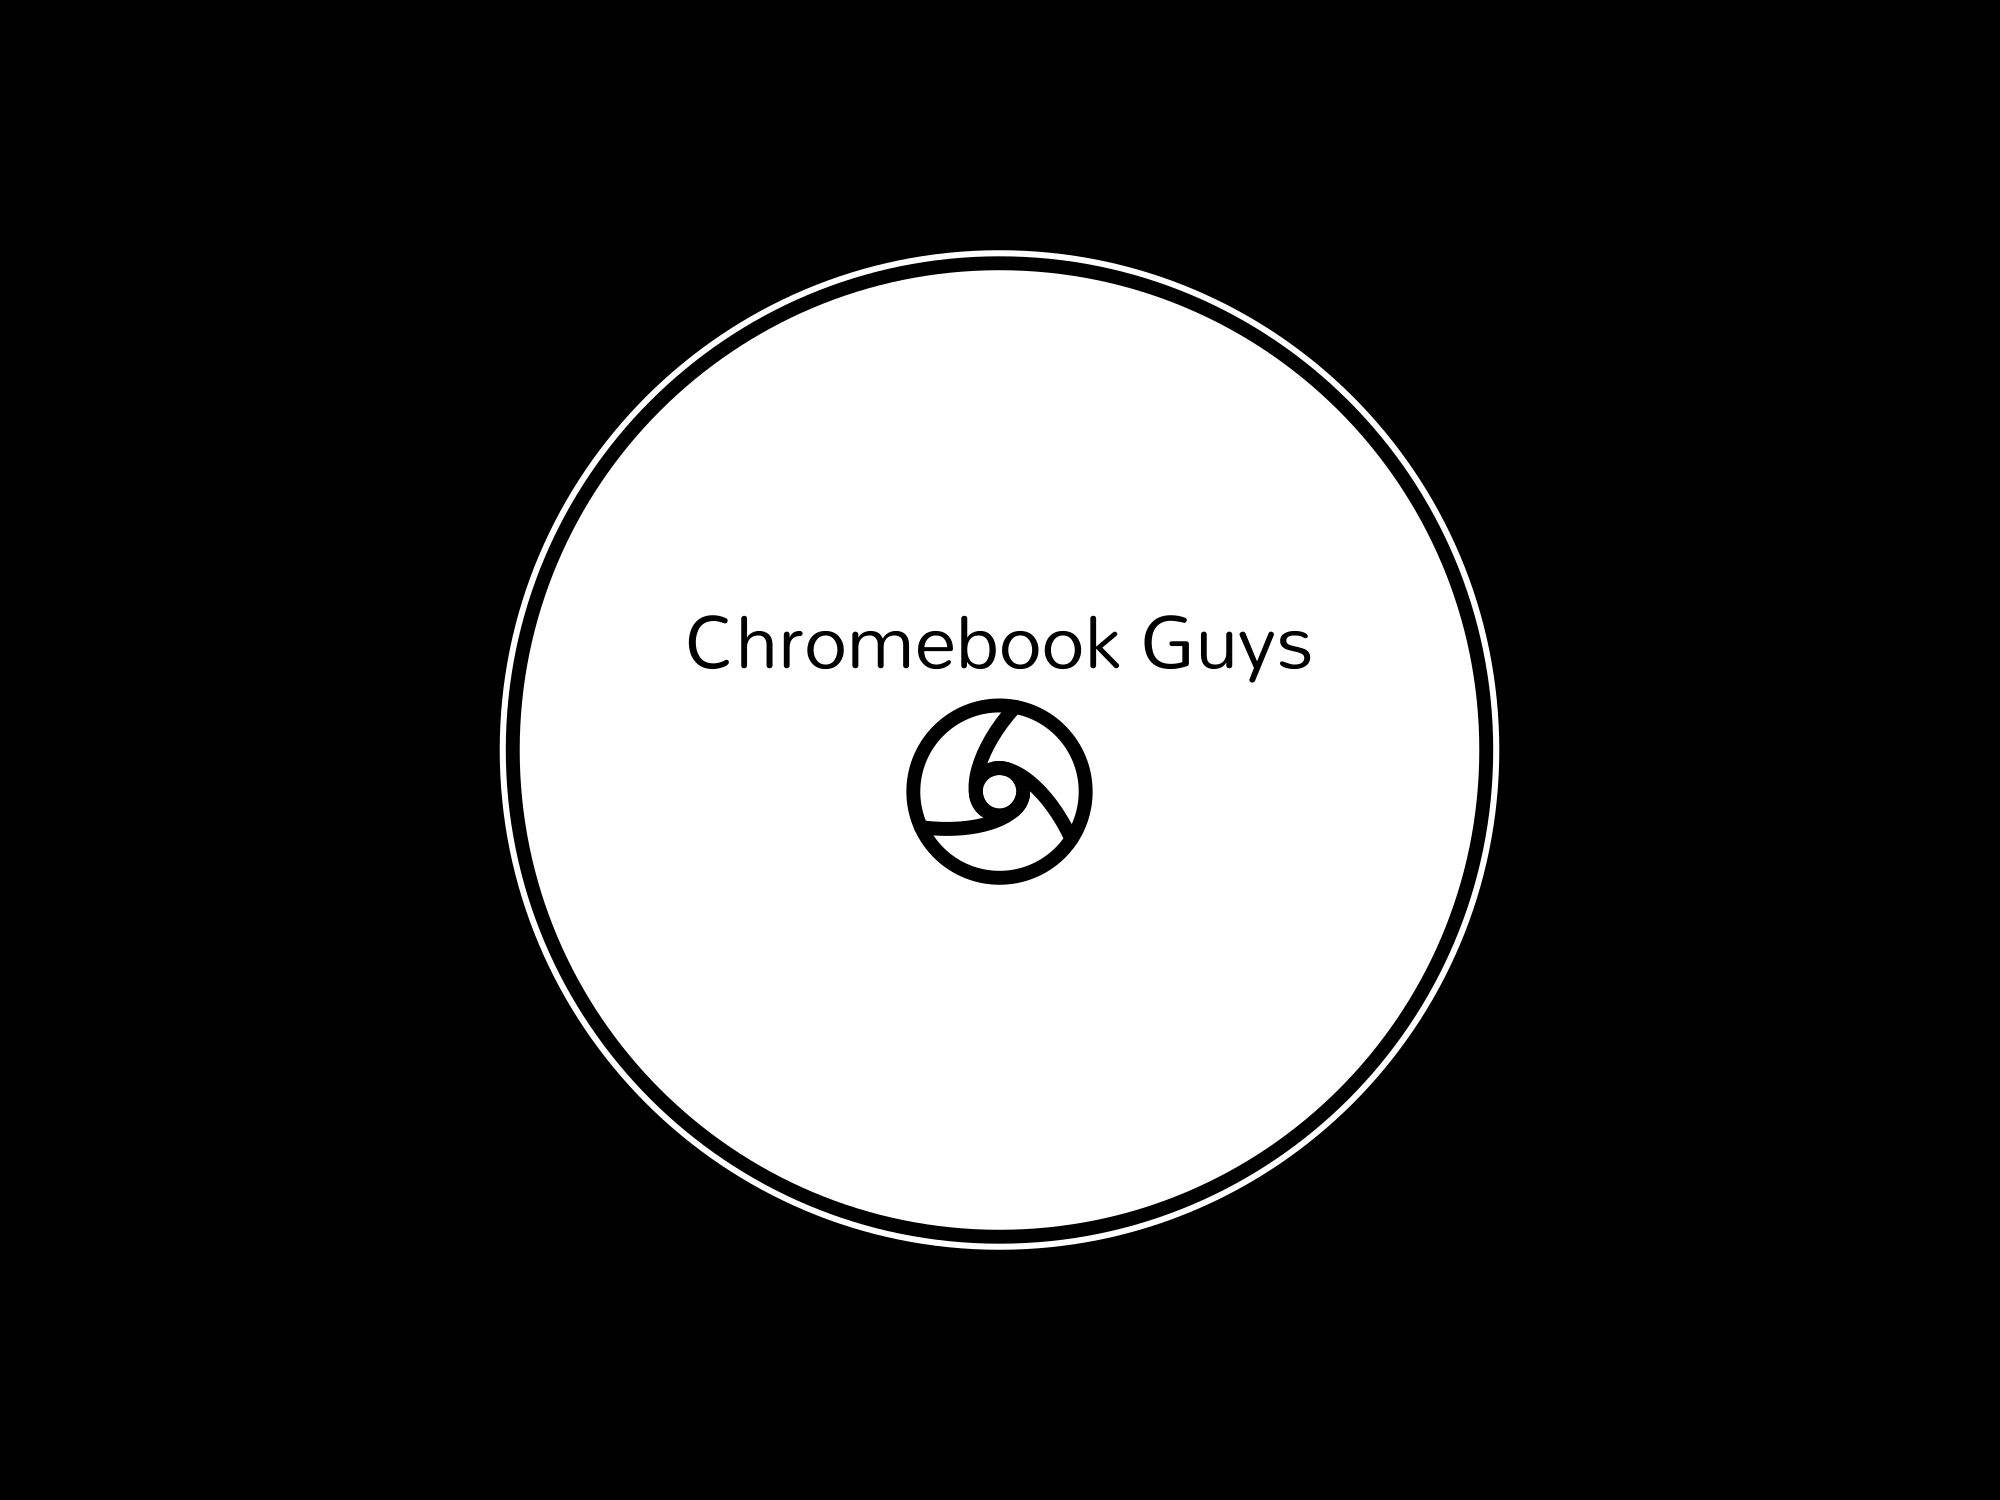 Chromebook Guys